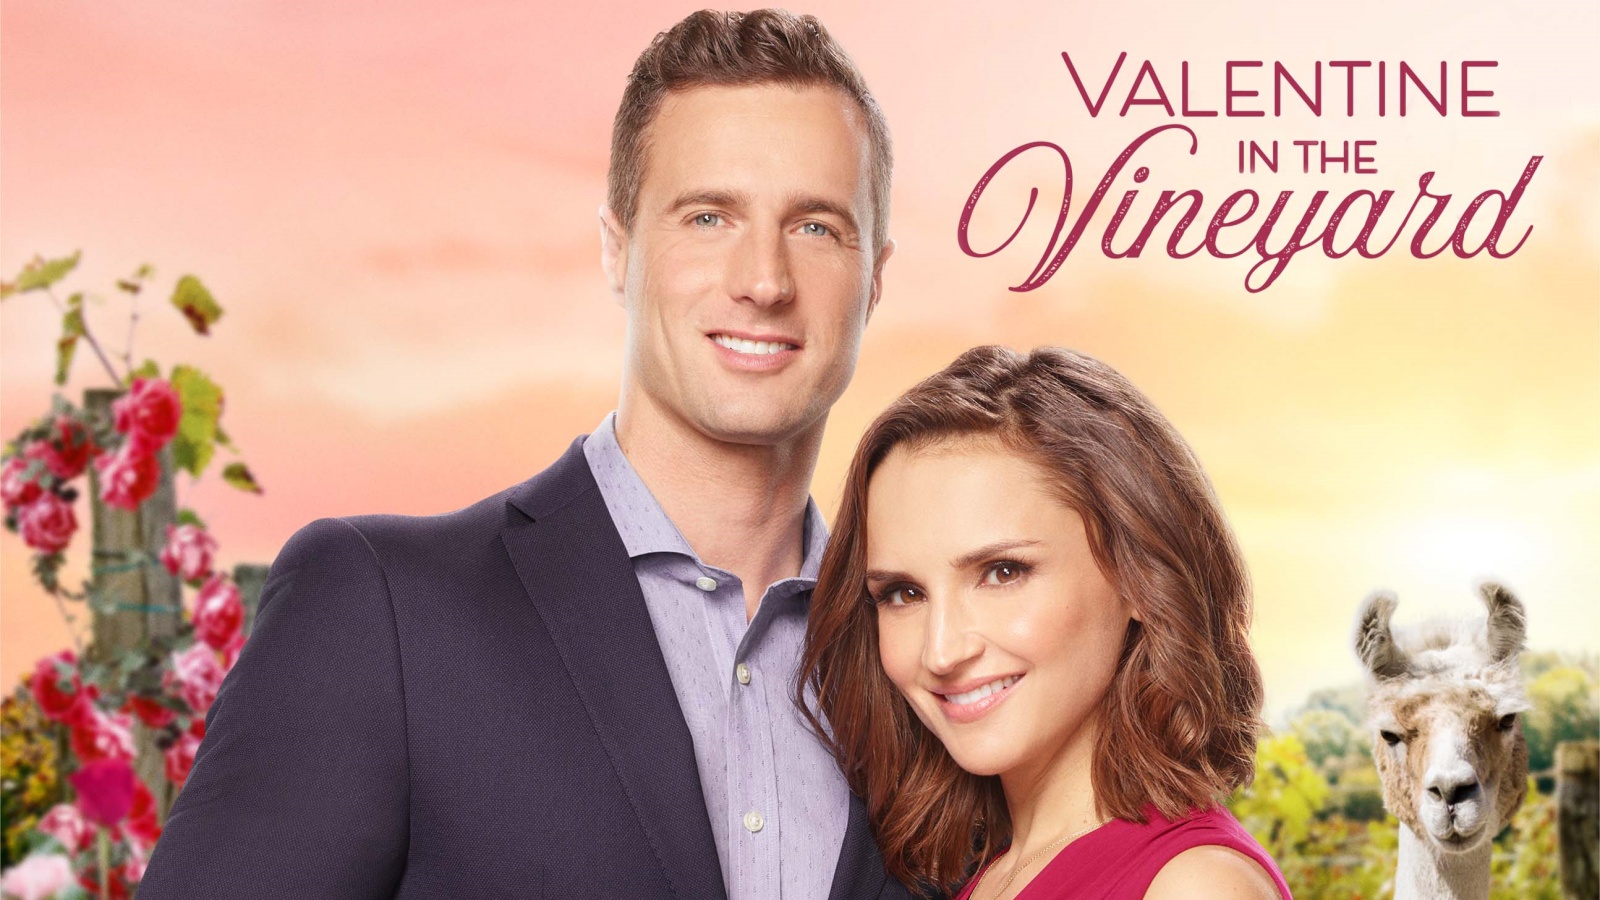 Met wie vier jij Valentijnsdag - Valentine in the Vineyard